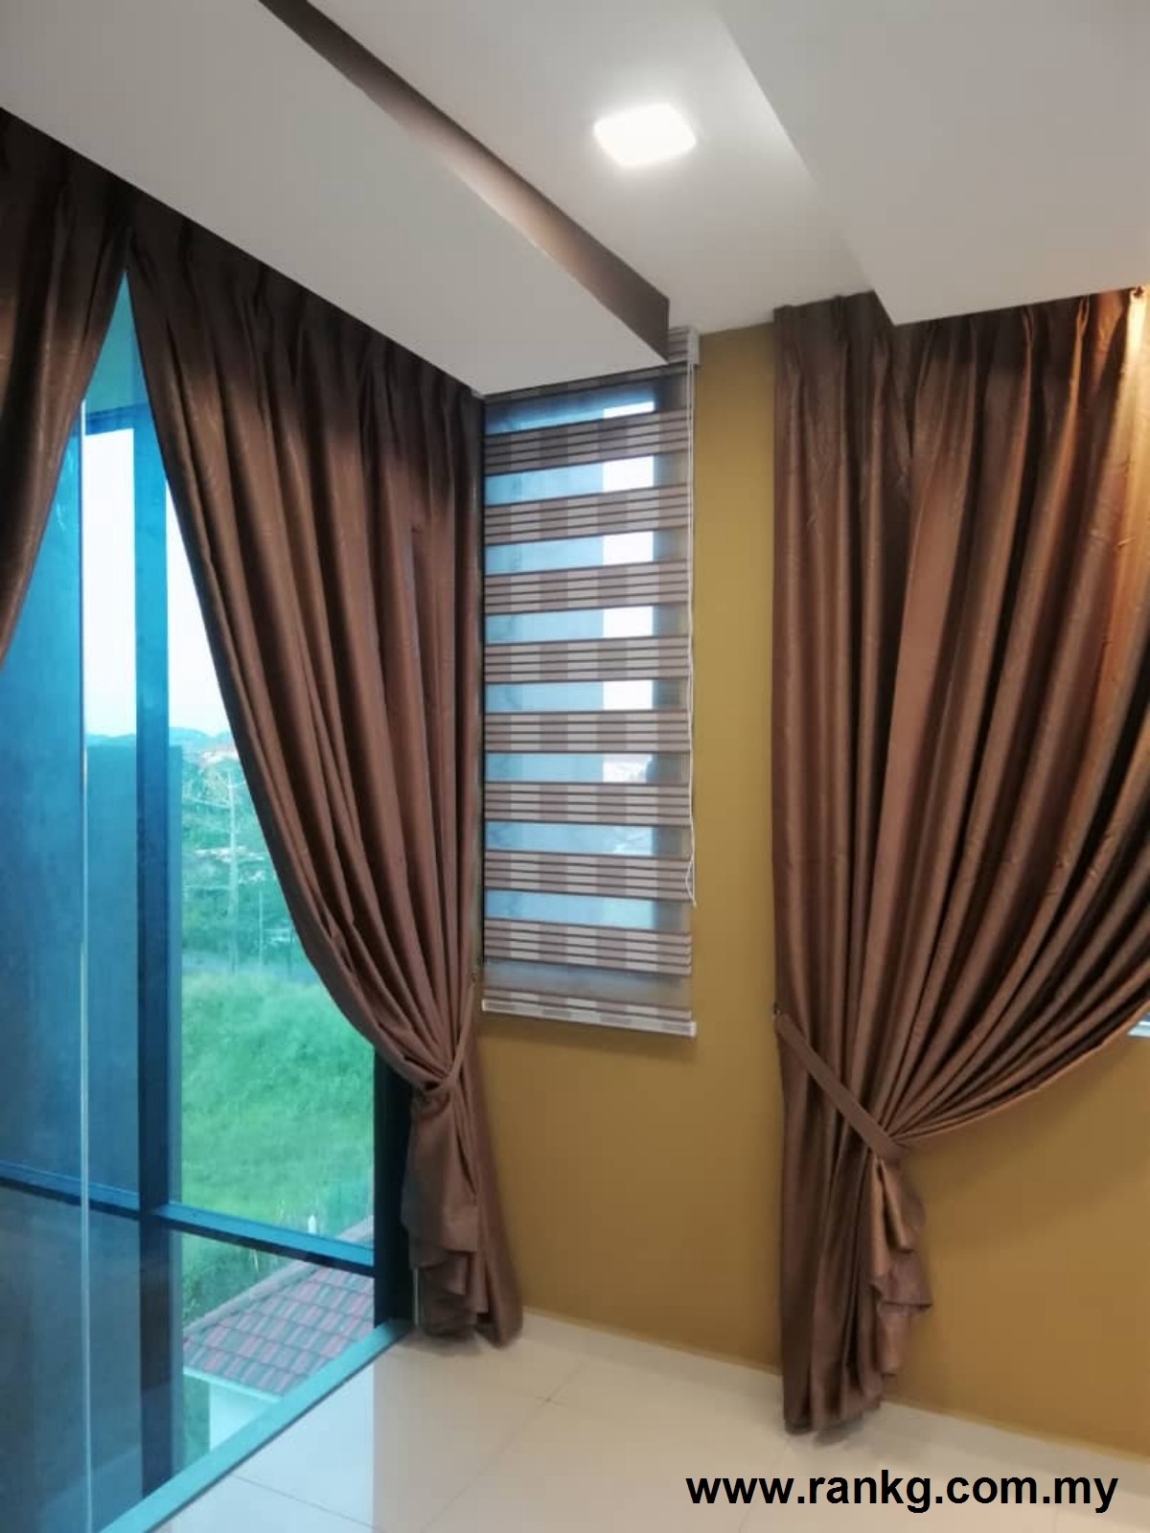 Zebra Blinds Complete Project Reference Kedah / Alor Setar / Sungai Petani / Kulim Curtain & Blinds Malaysia Reference Renovation Design 